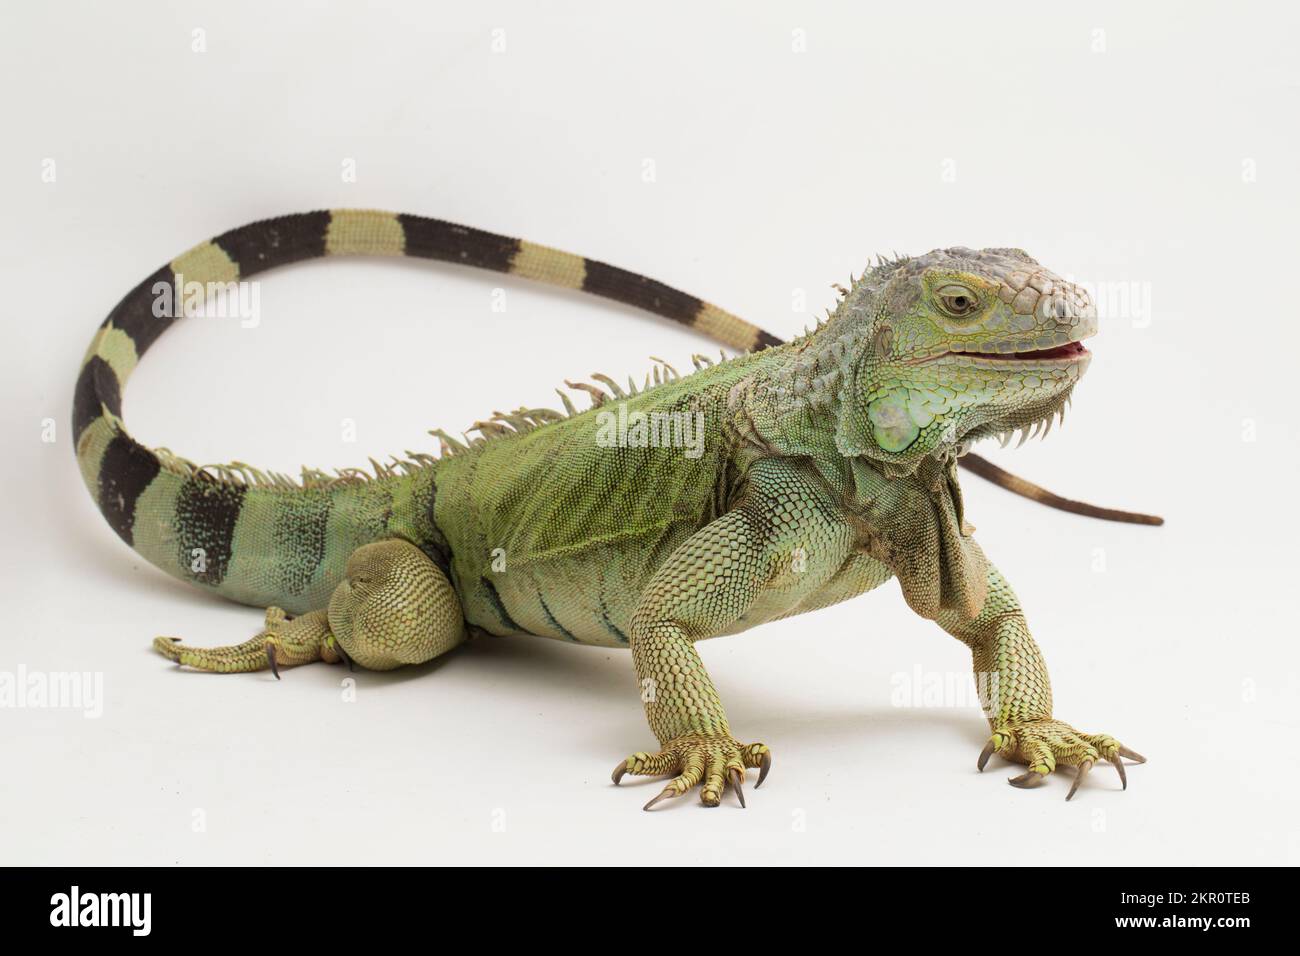 Big Green Iguana lizard isolated on a white background Stock Photo